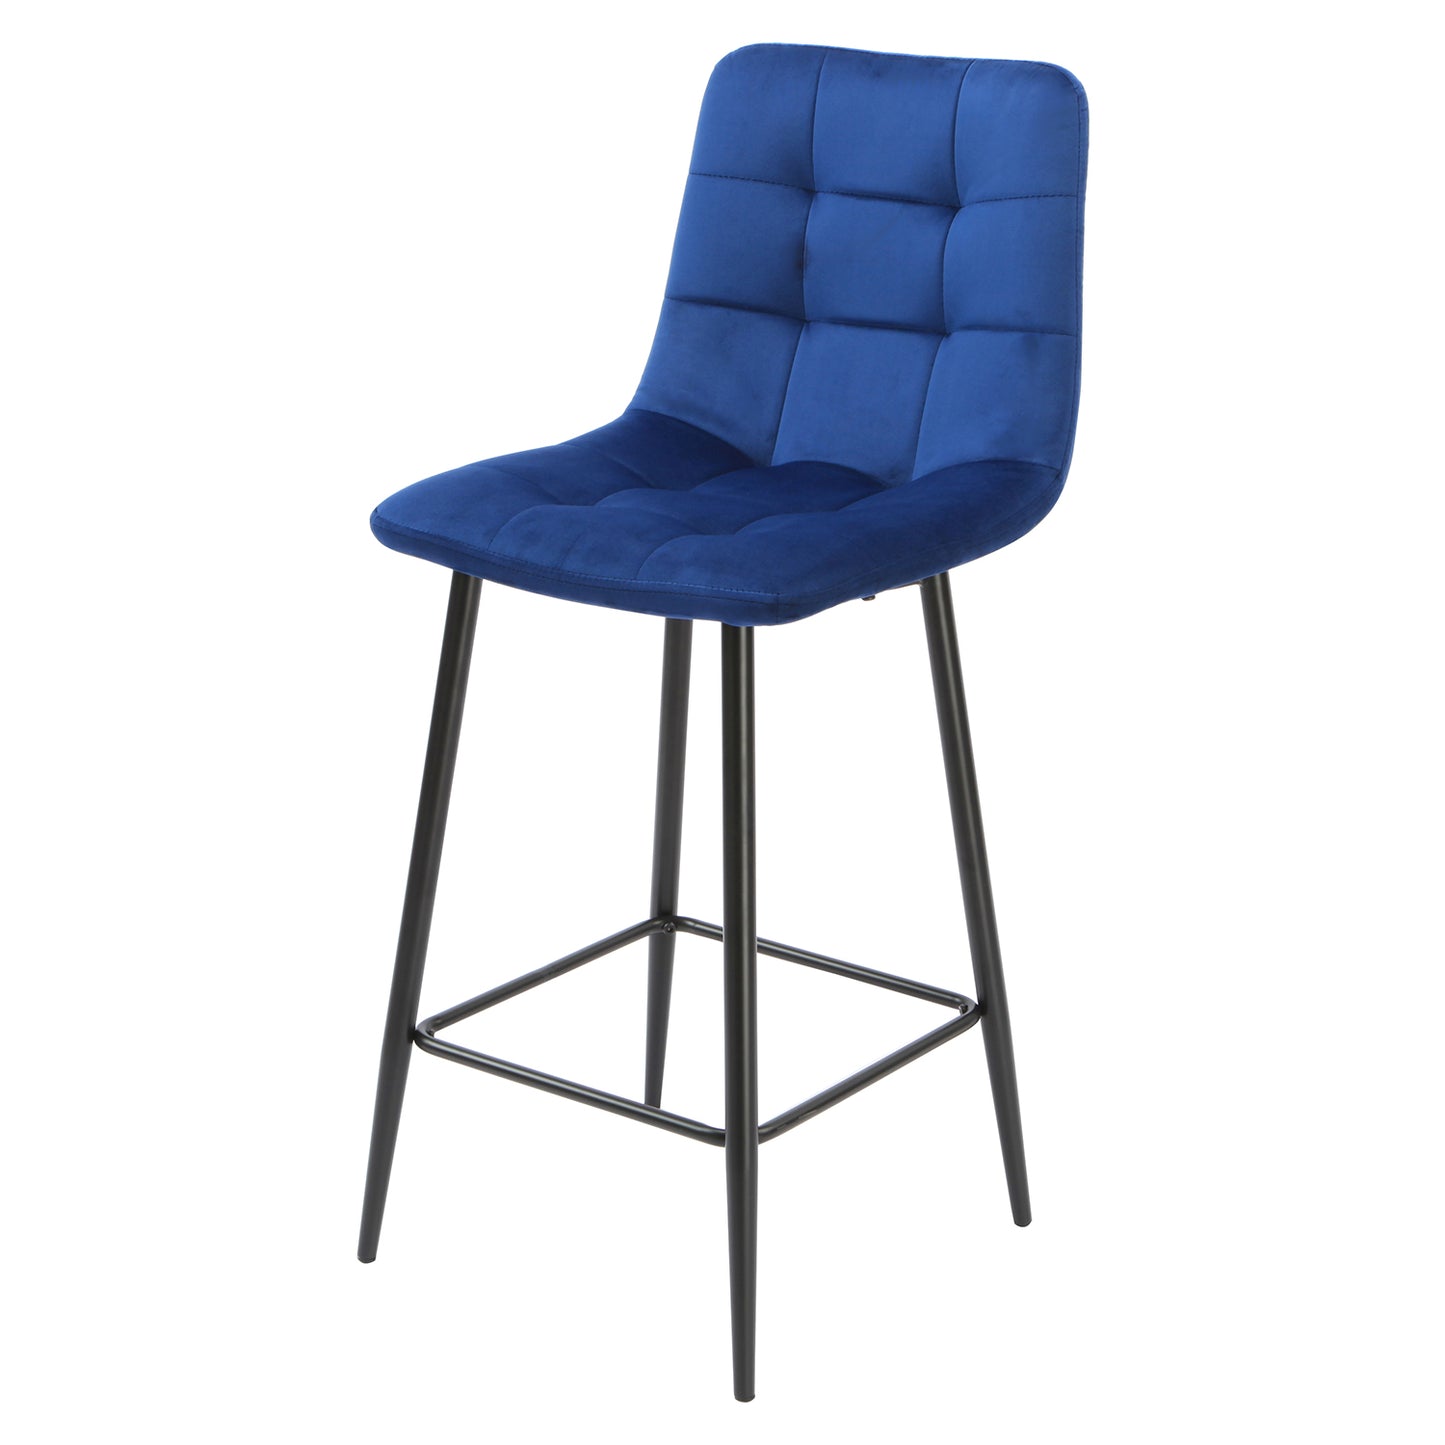 2 Set squared navy blue kitchen bar stool by Native